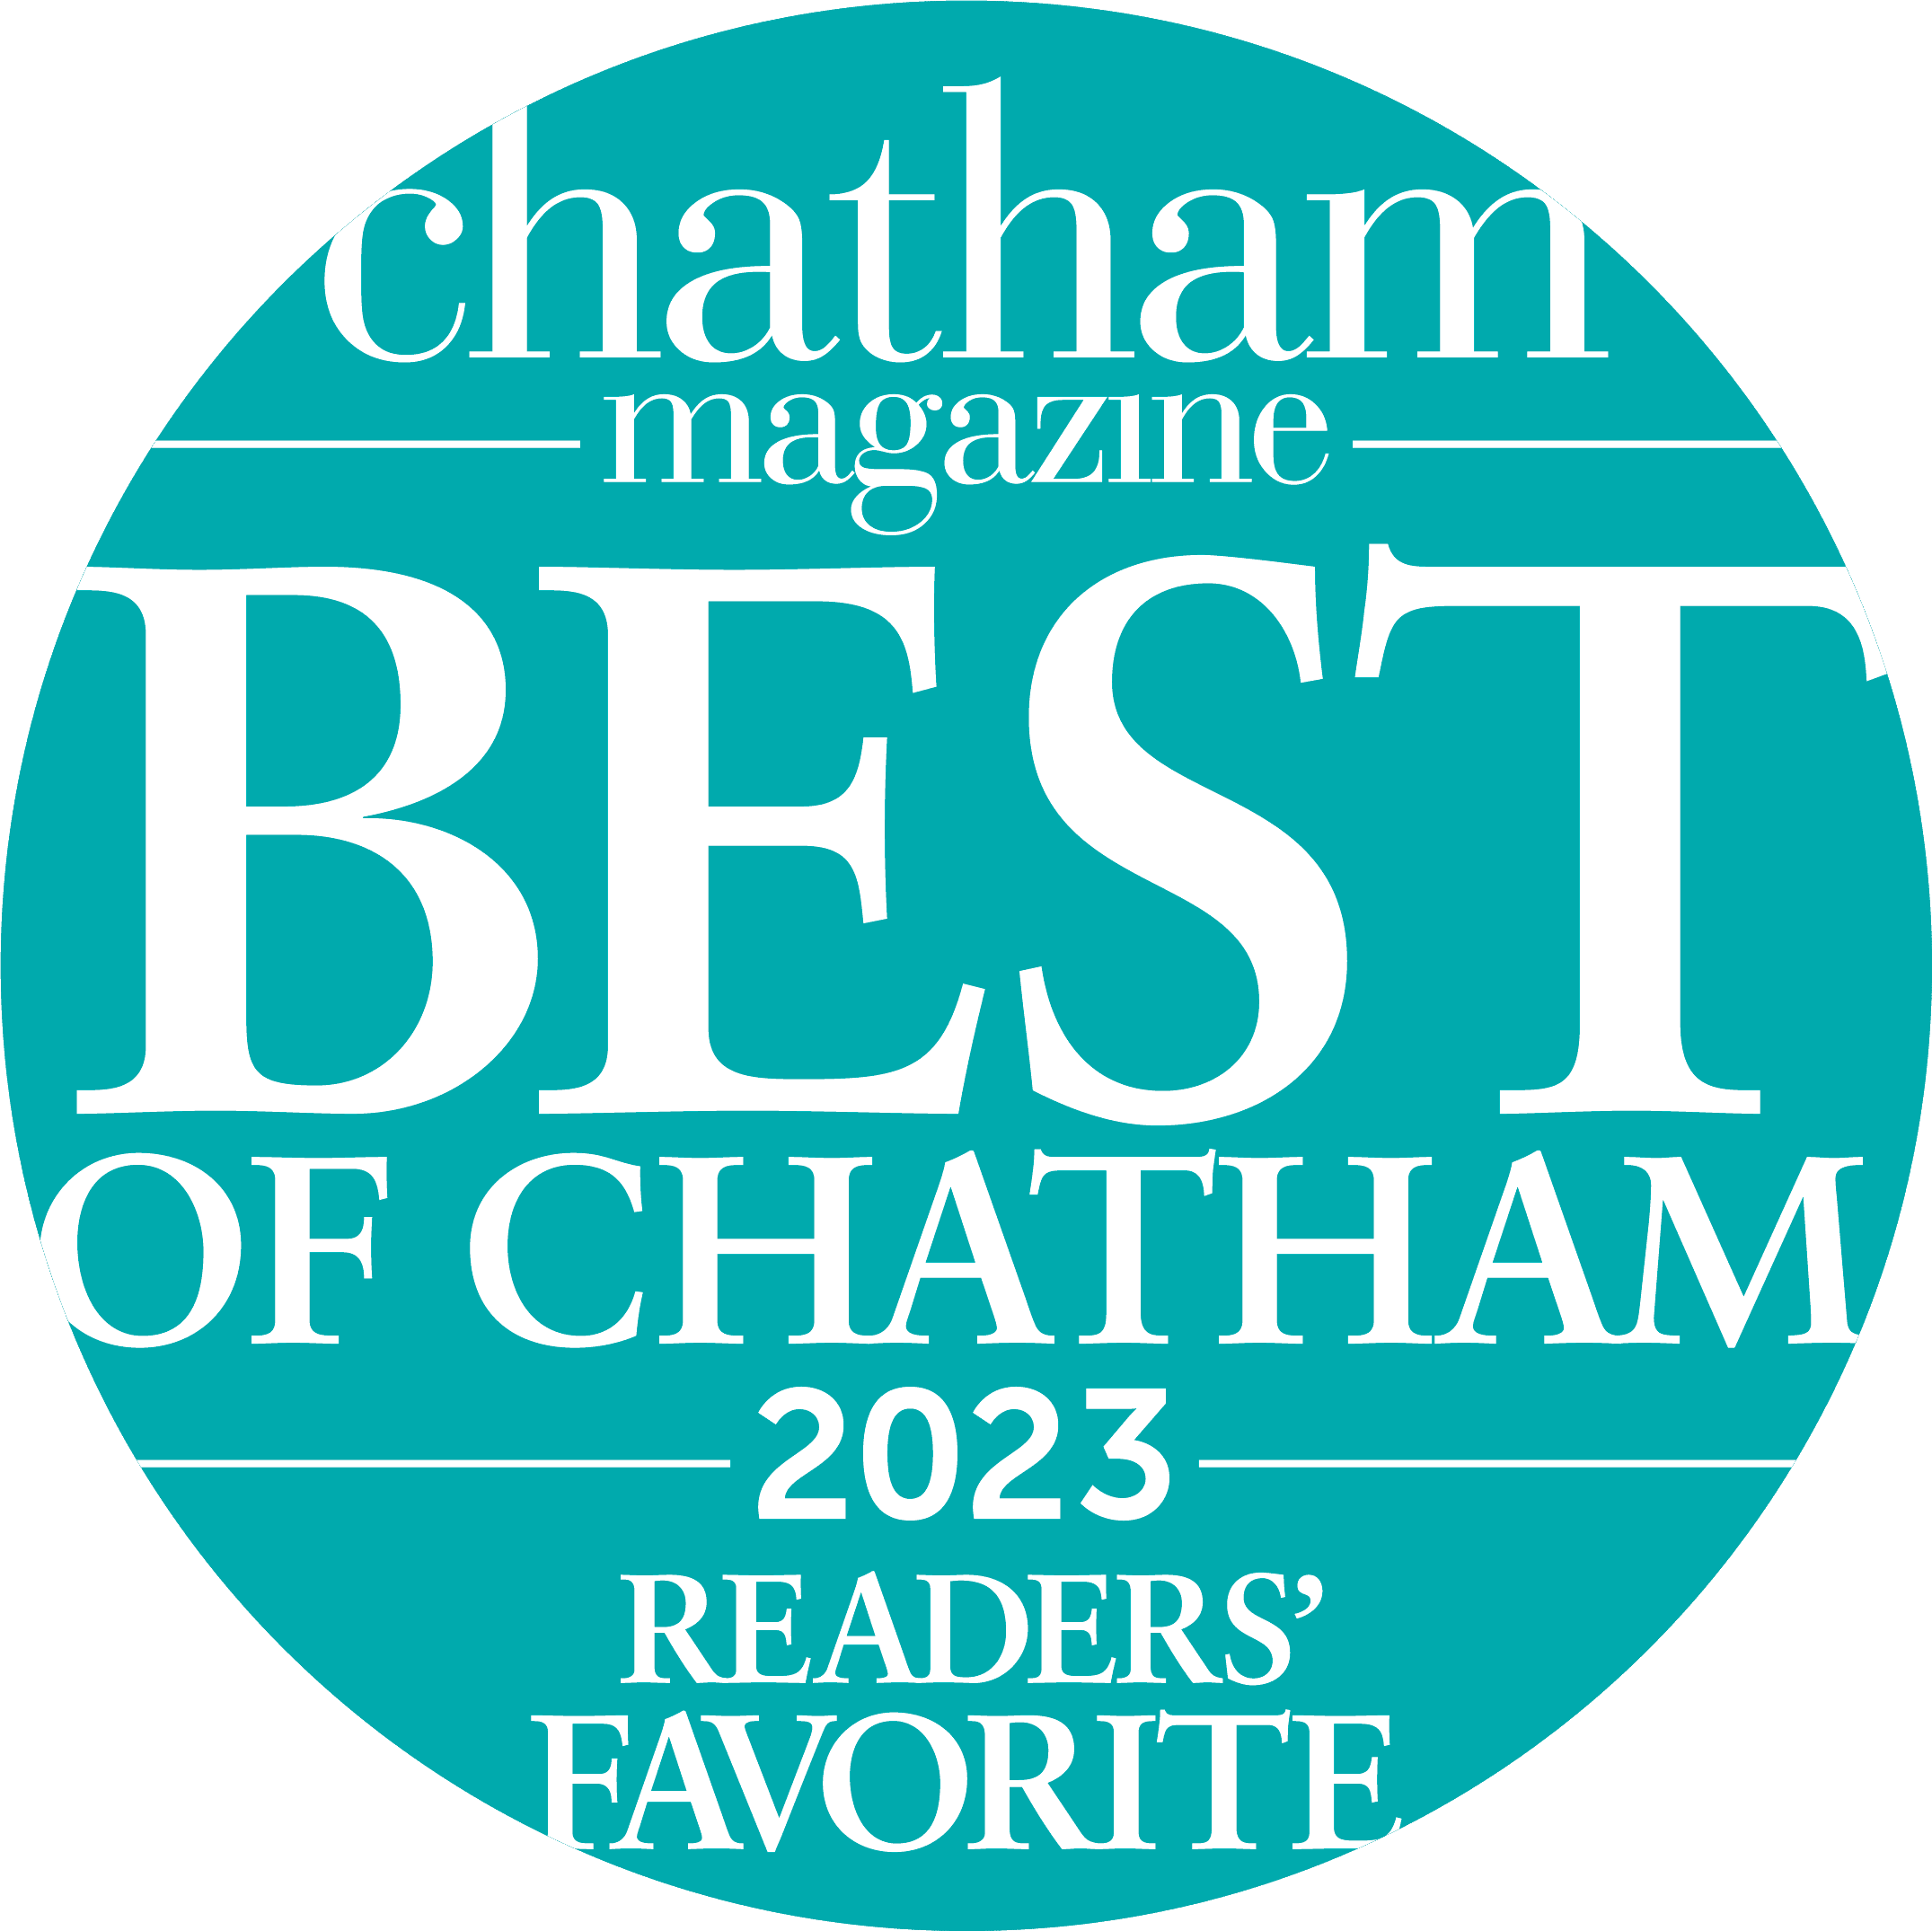 Best of chatham 2023 logo